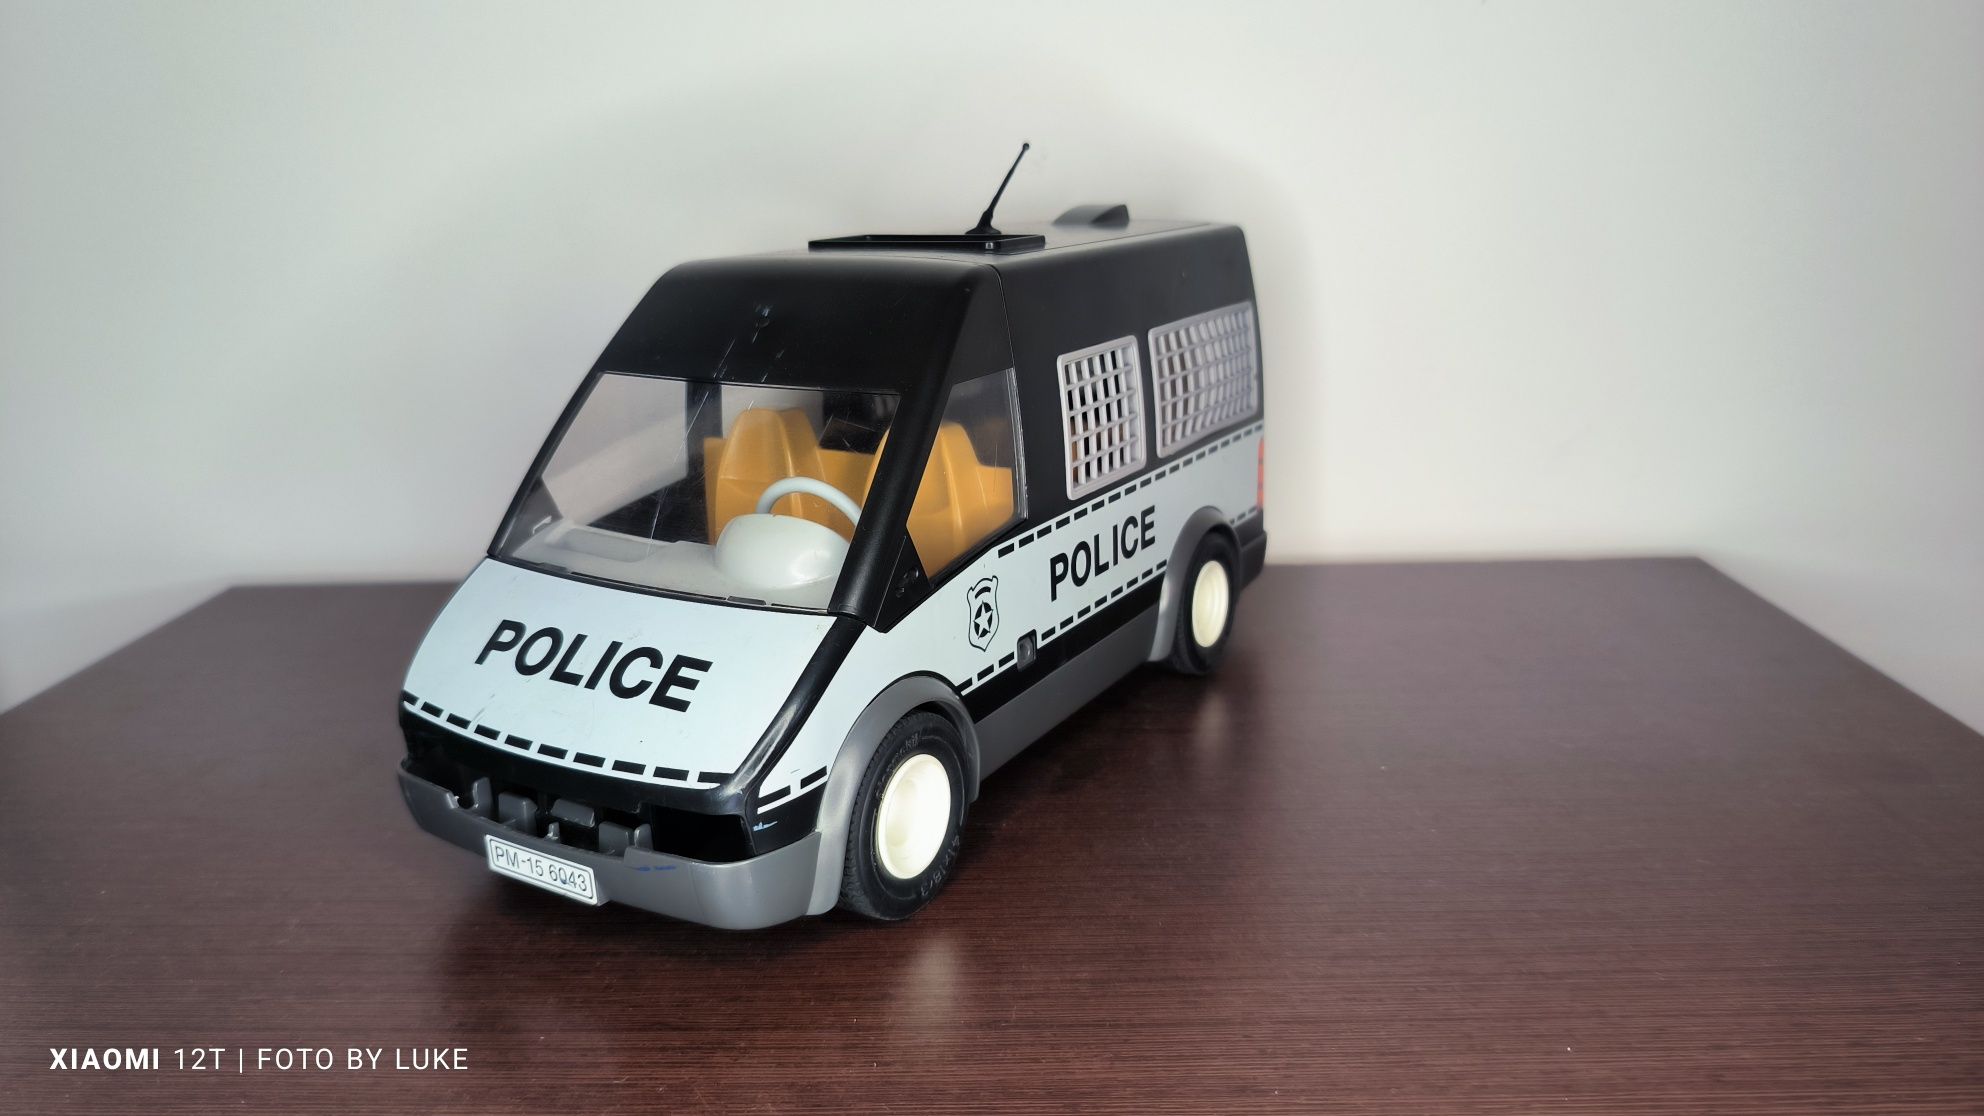 Playmobil 6043 samochod policyjny van